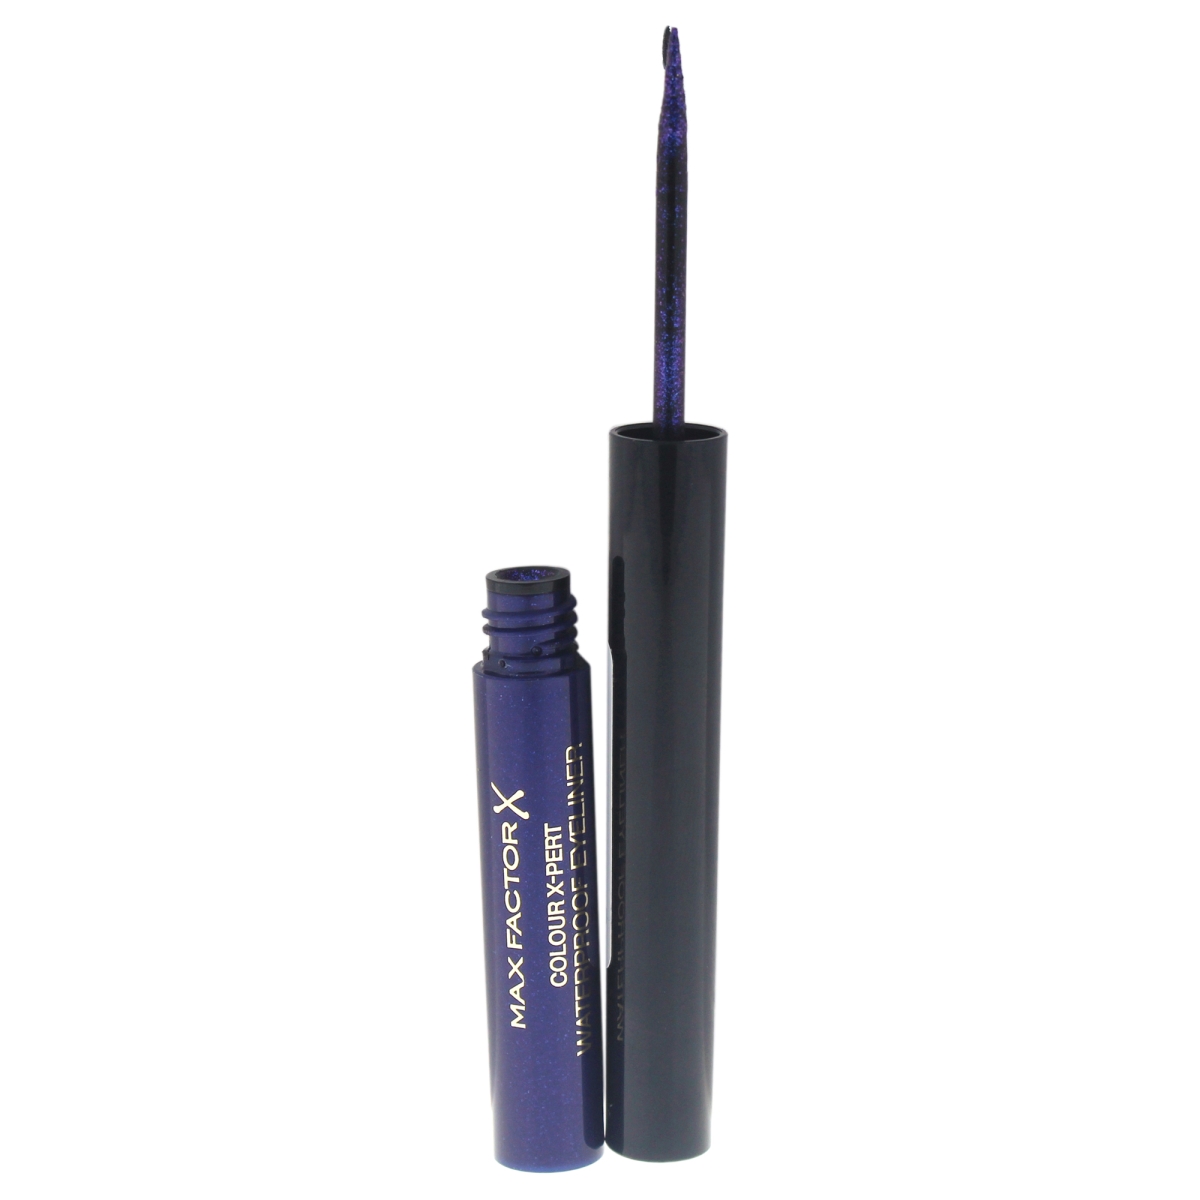 W-c-11215 0.06 Oz No. 03 Colour X-pert Waterproof Eyeliner - Metallic Lilac For Women